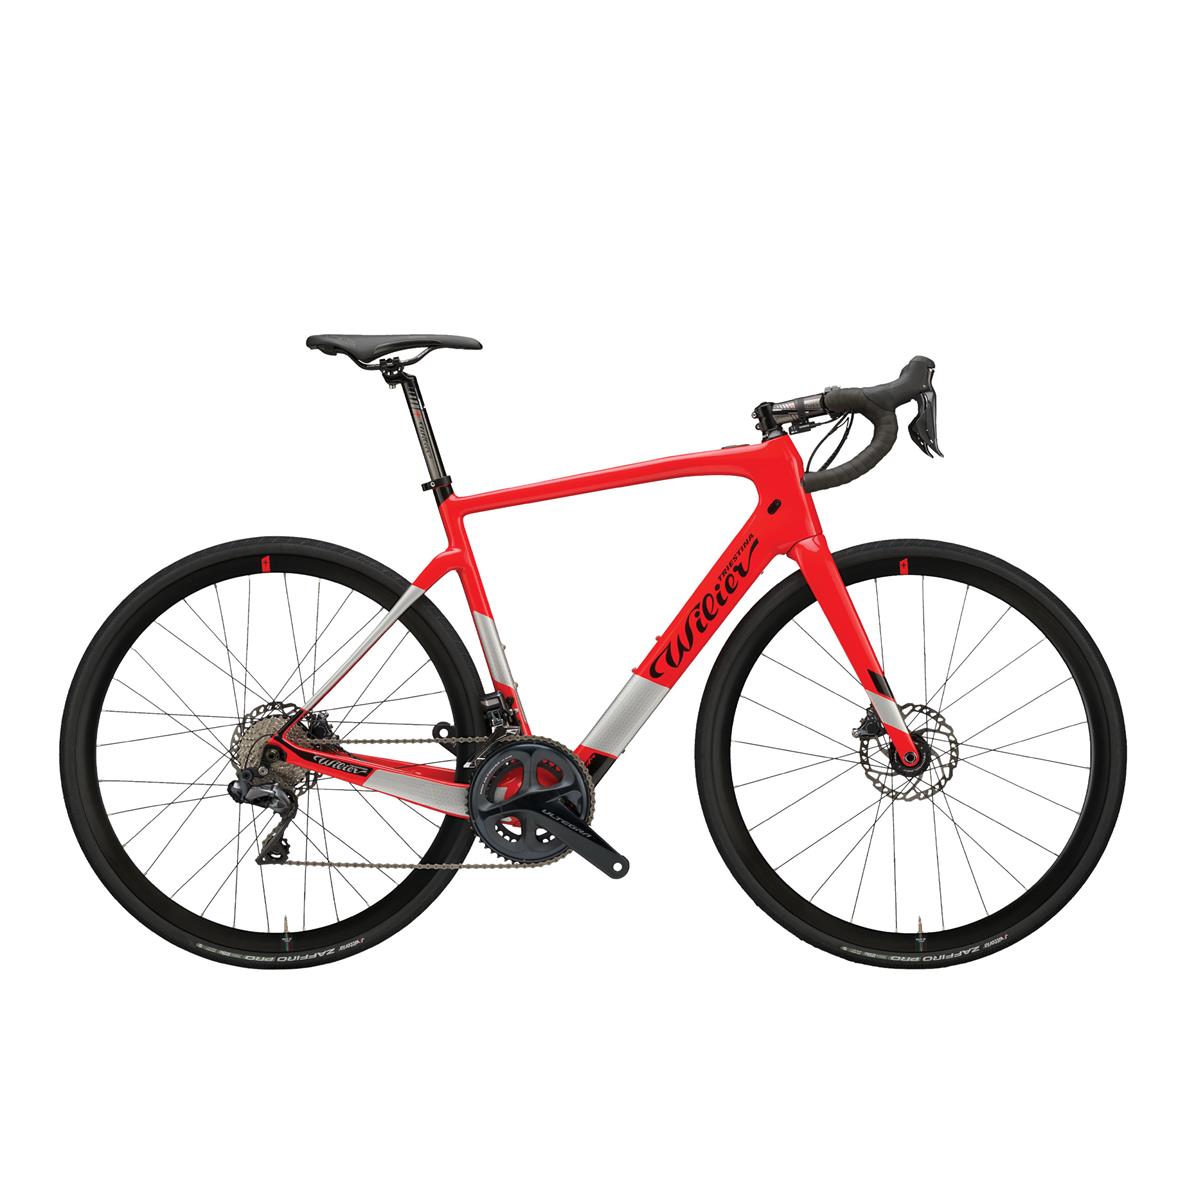 Wilier Cento1 Hybrid Red Rennrad E-Bike Fahrrad Bike | eBay